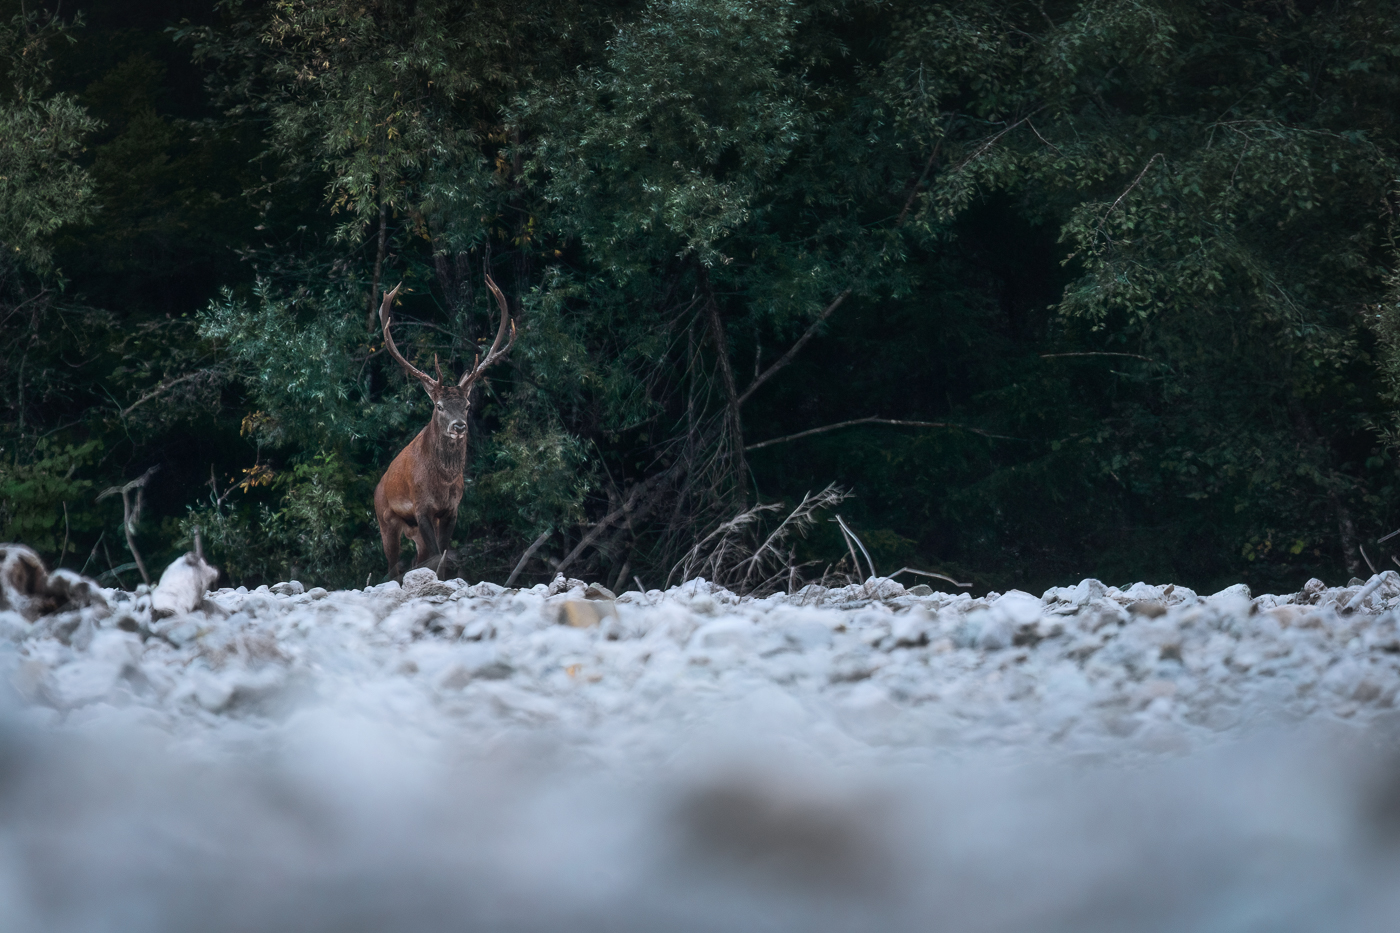 Un maschio di cervo nobile (Cervus elaphus) esce dal bosco per iniziare una lunga sequenza di bramiti. Parco Naturale Dolomiti Friulane, Italia.